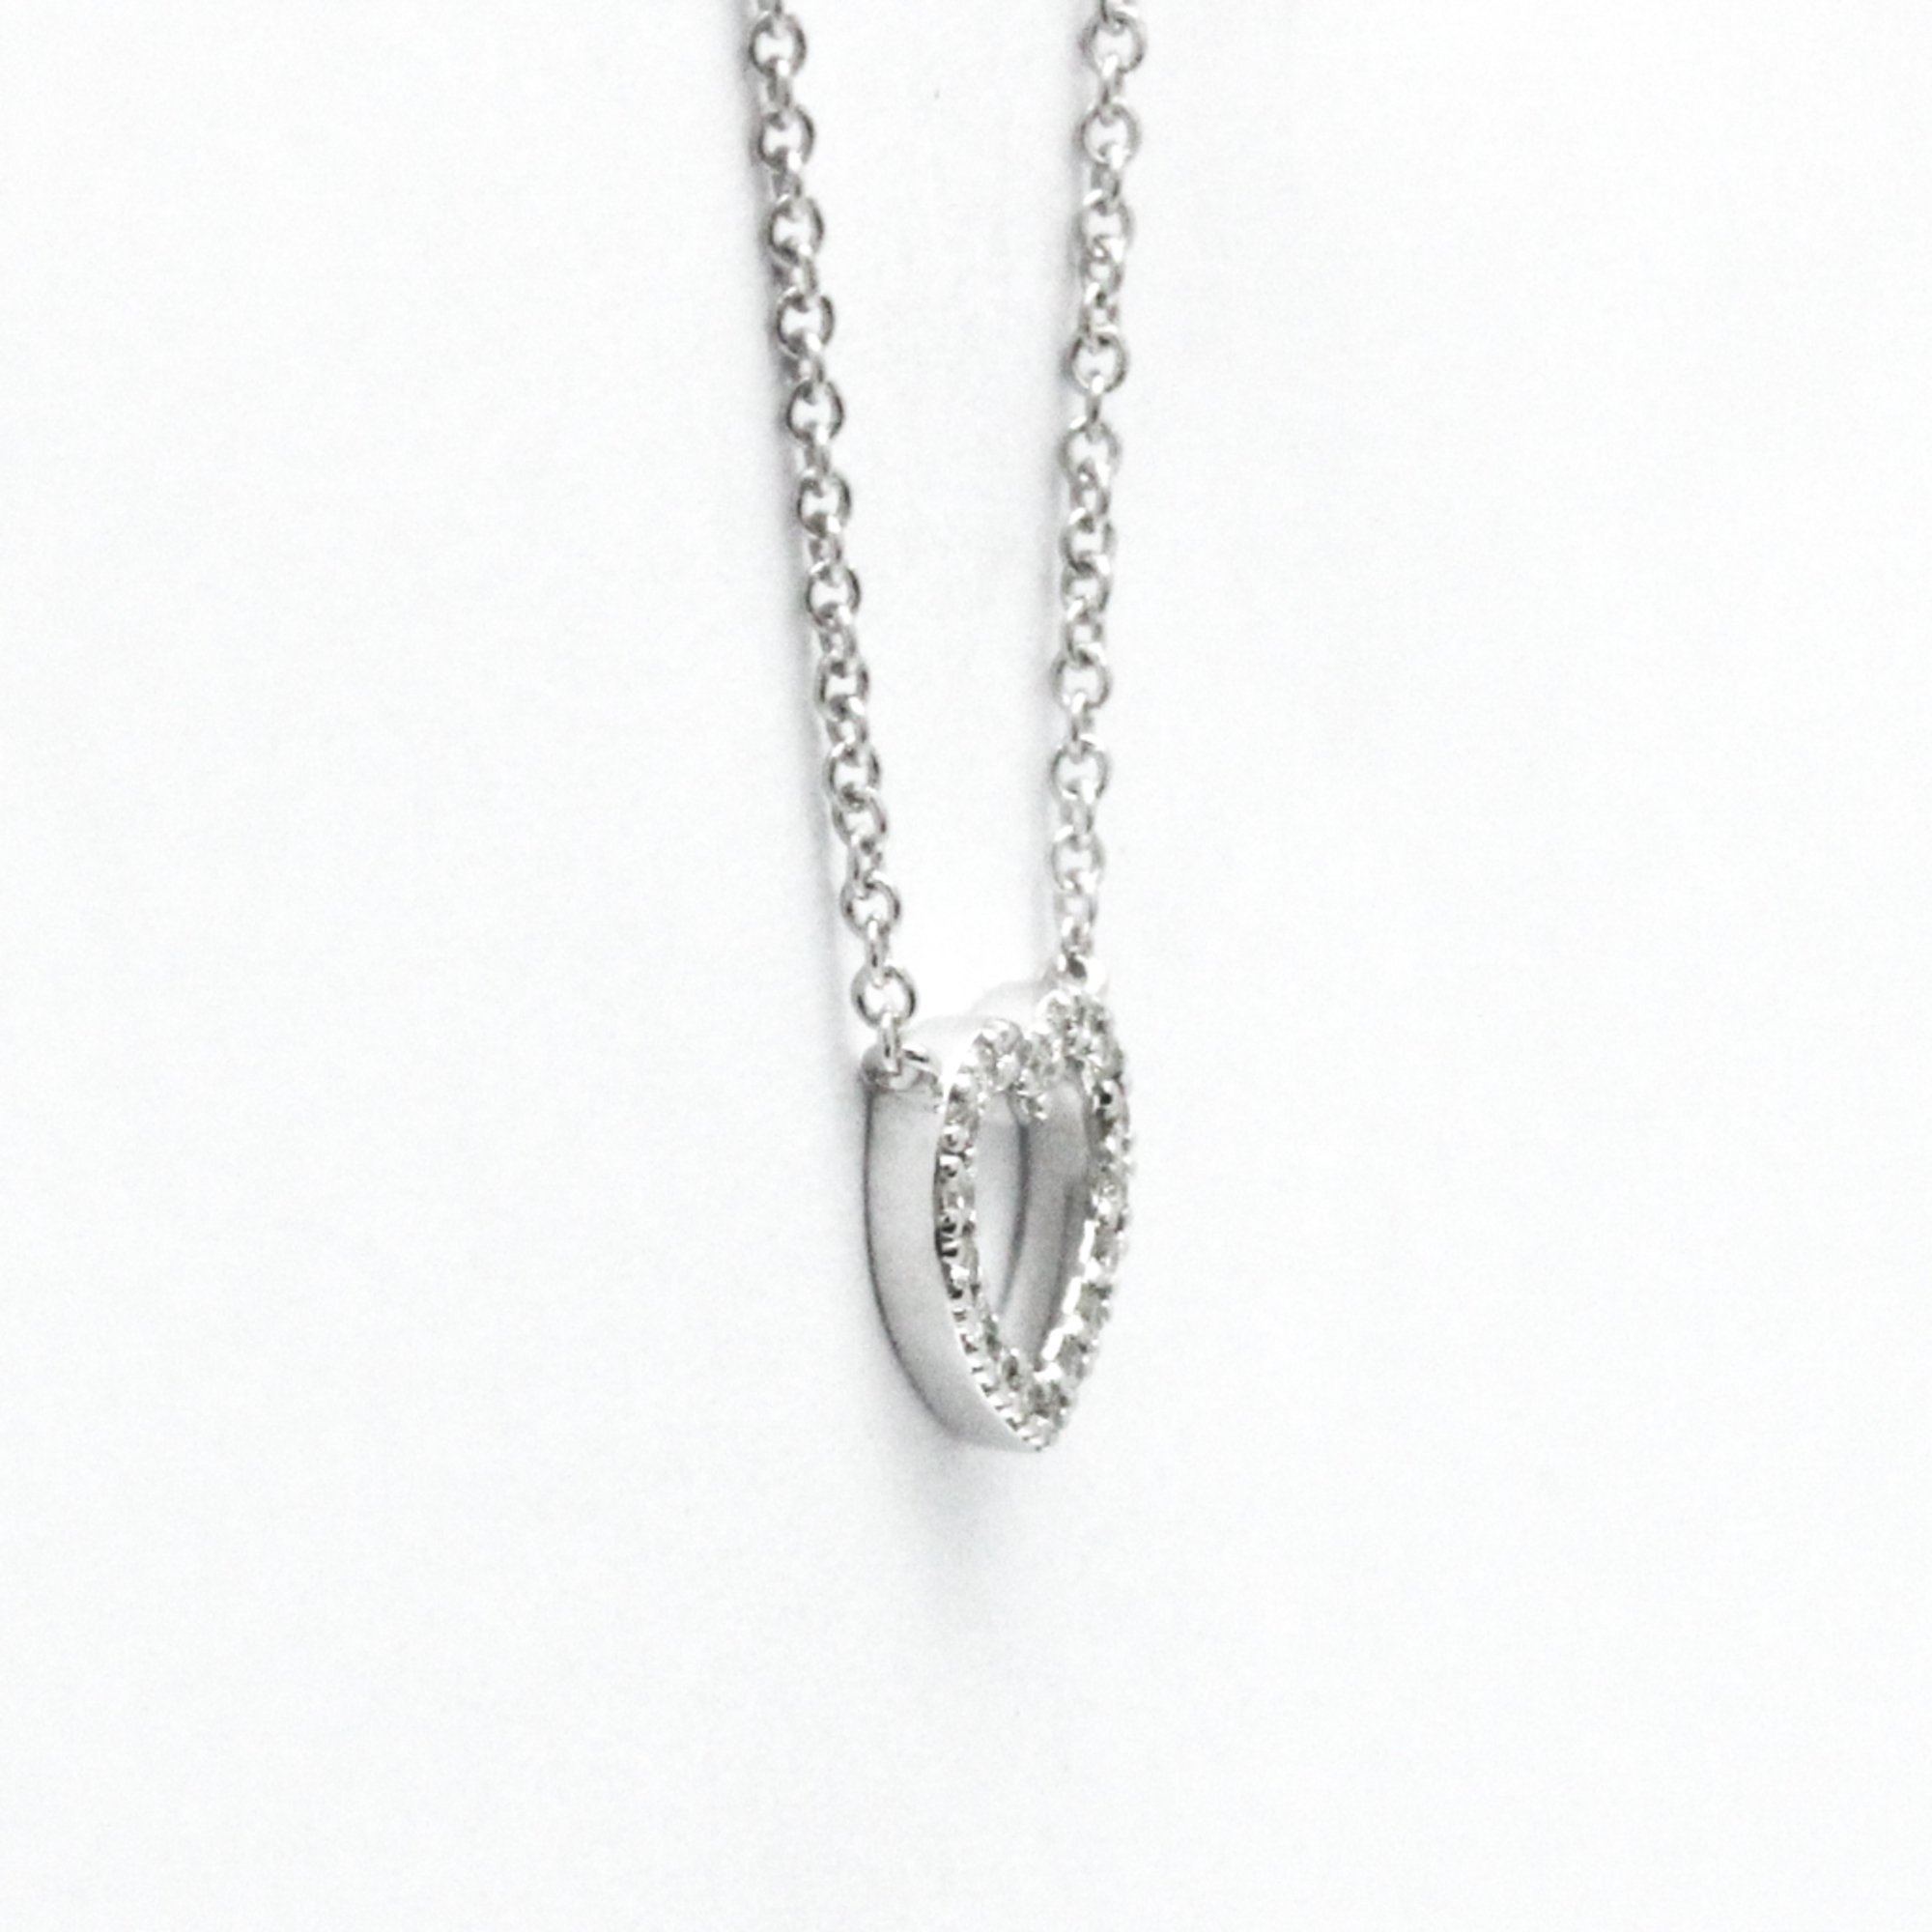 Tiffany Metro Heart Necklace White Gold (18K) Diamond Men,Women Fashion Pendant Necklace (Silver)